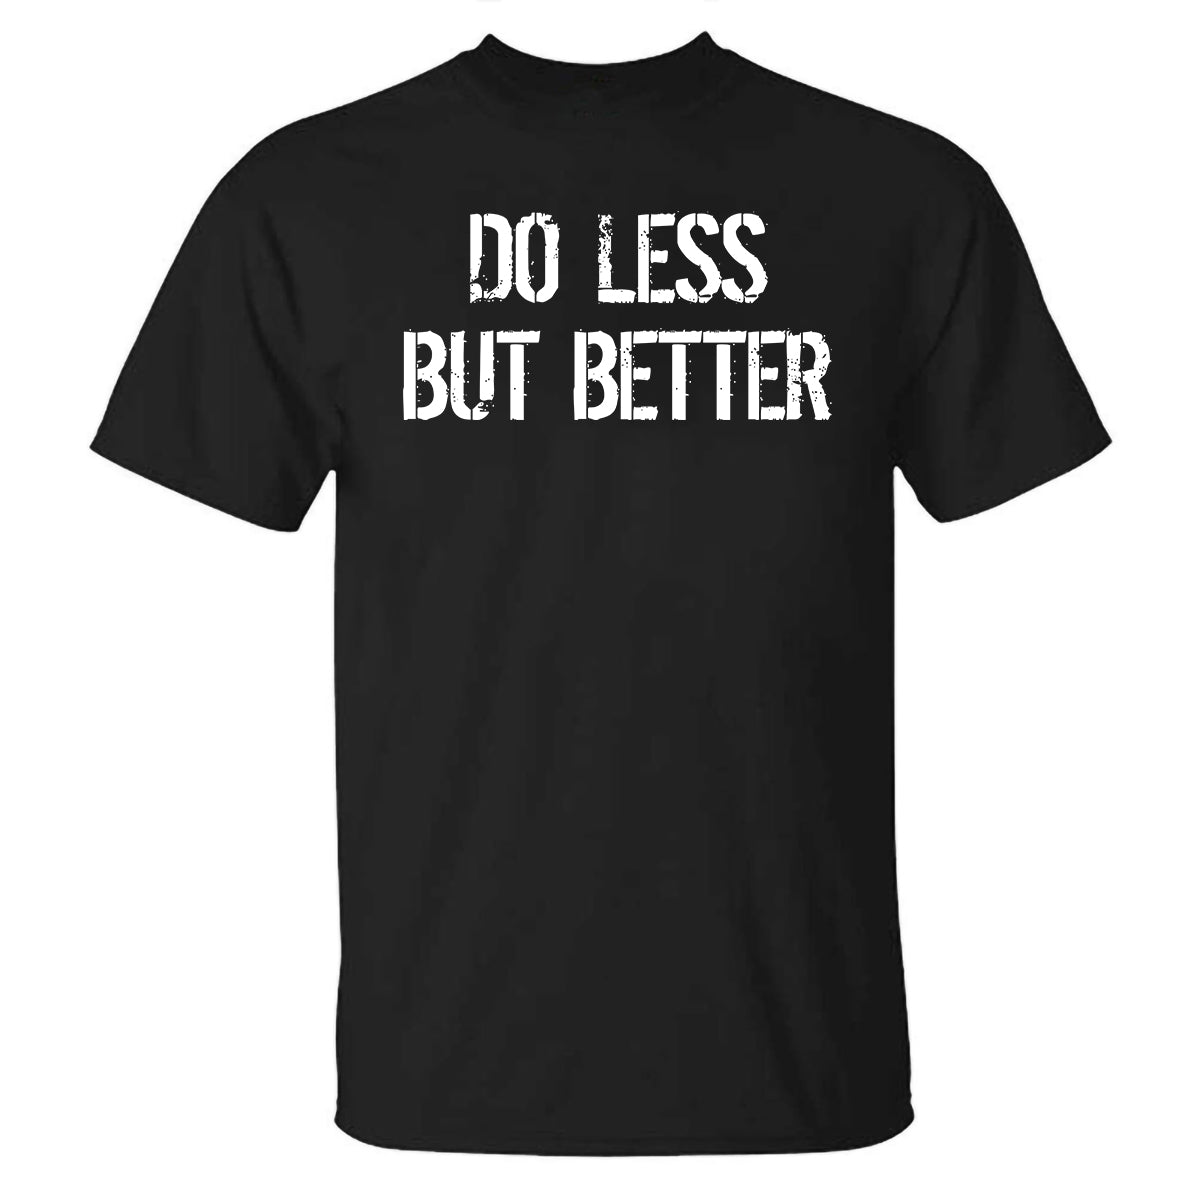 Do Less But Better Printed T-shirt